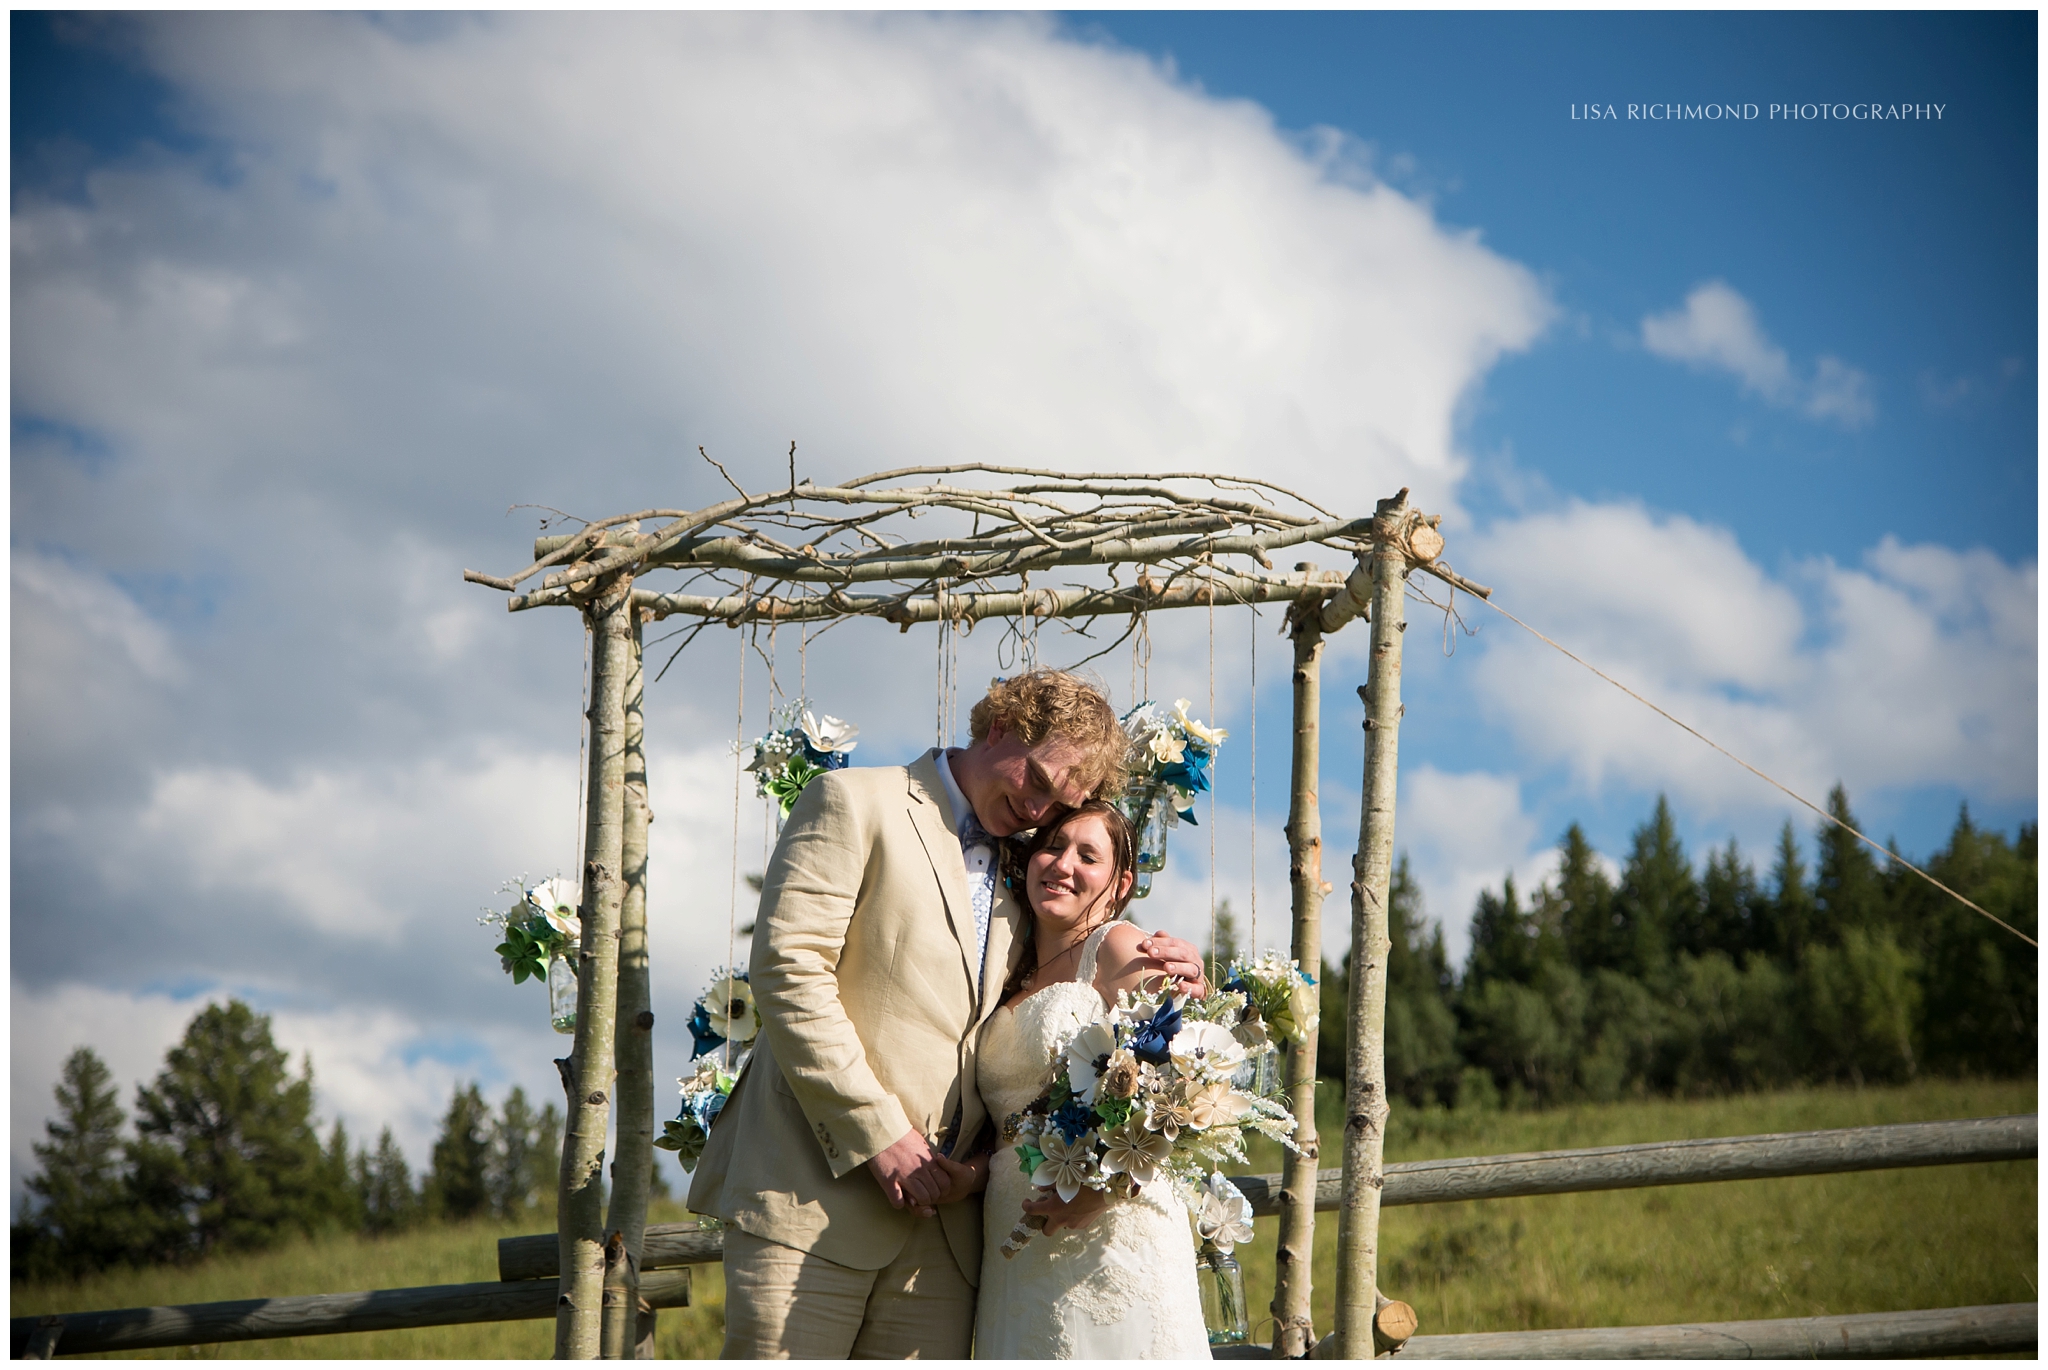 Lisa Richmond Photography-Destination Wedding Photographer_1758